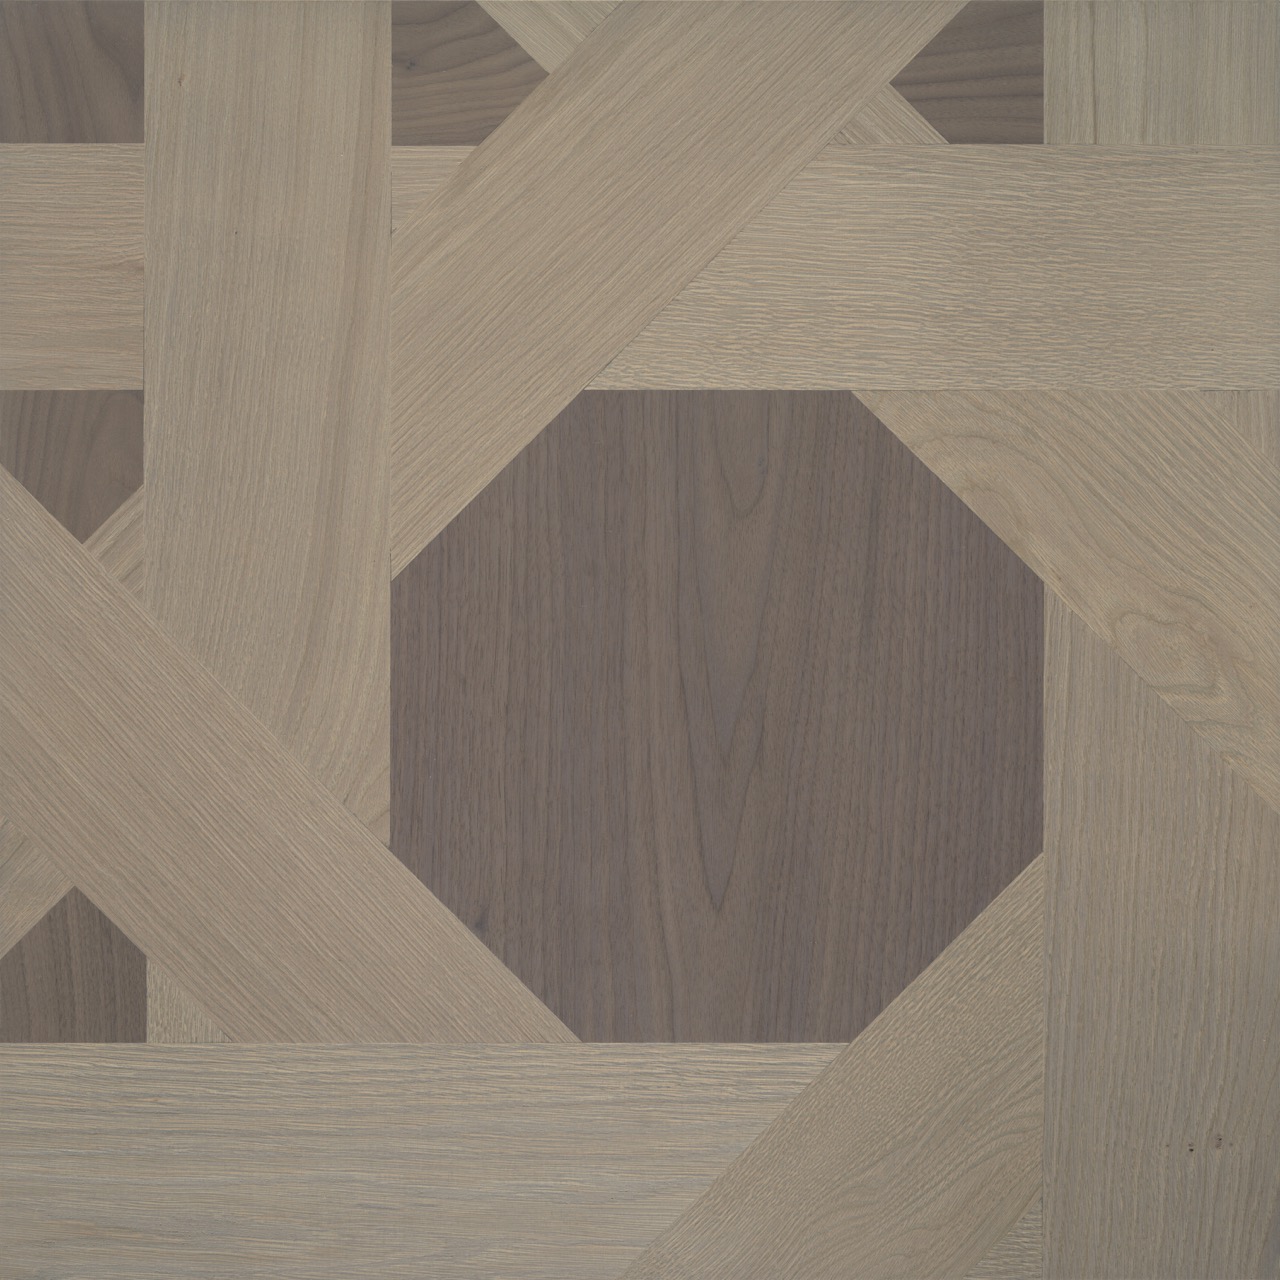 Trieste modular geometric wood floor. Design Panels.